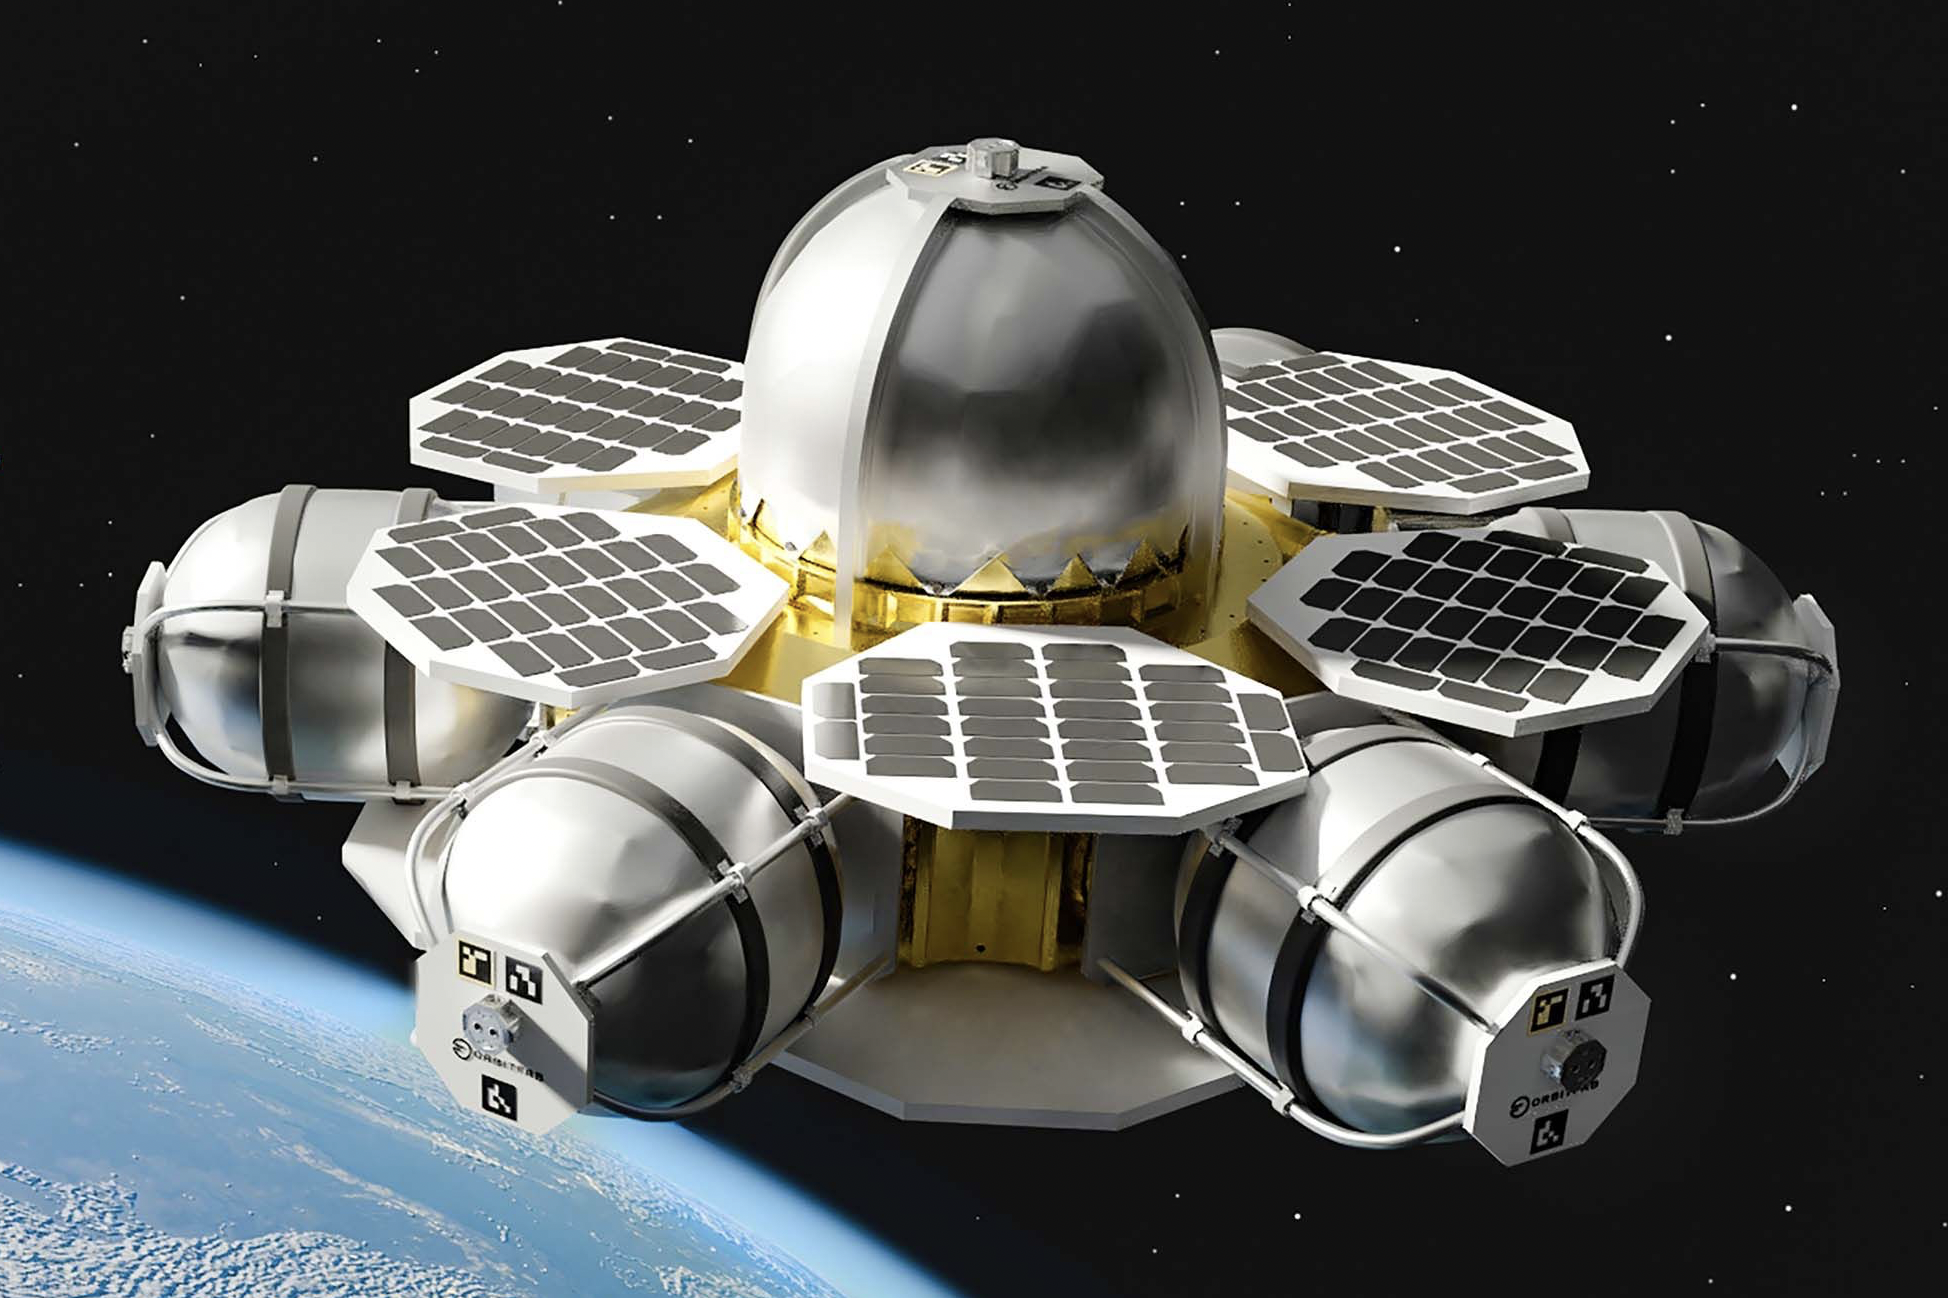 Orbit Fab to launch propellant tanker to fuel satellites in geostationary orbit - SpaceNews